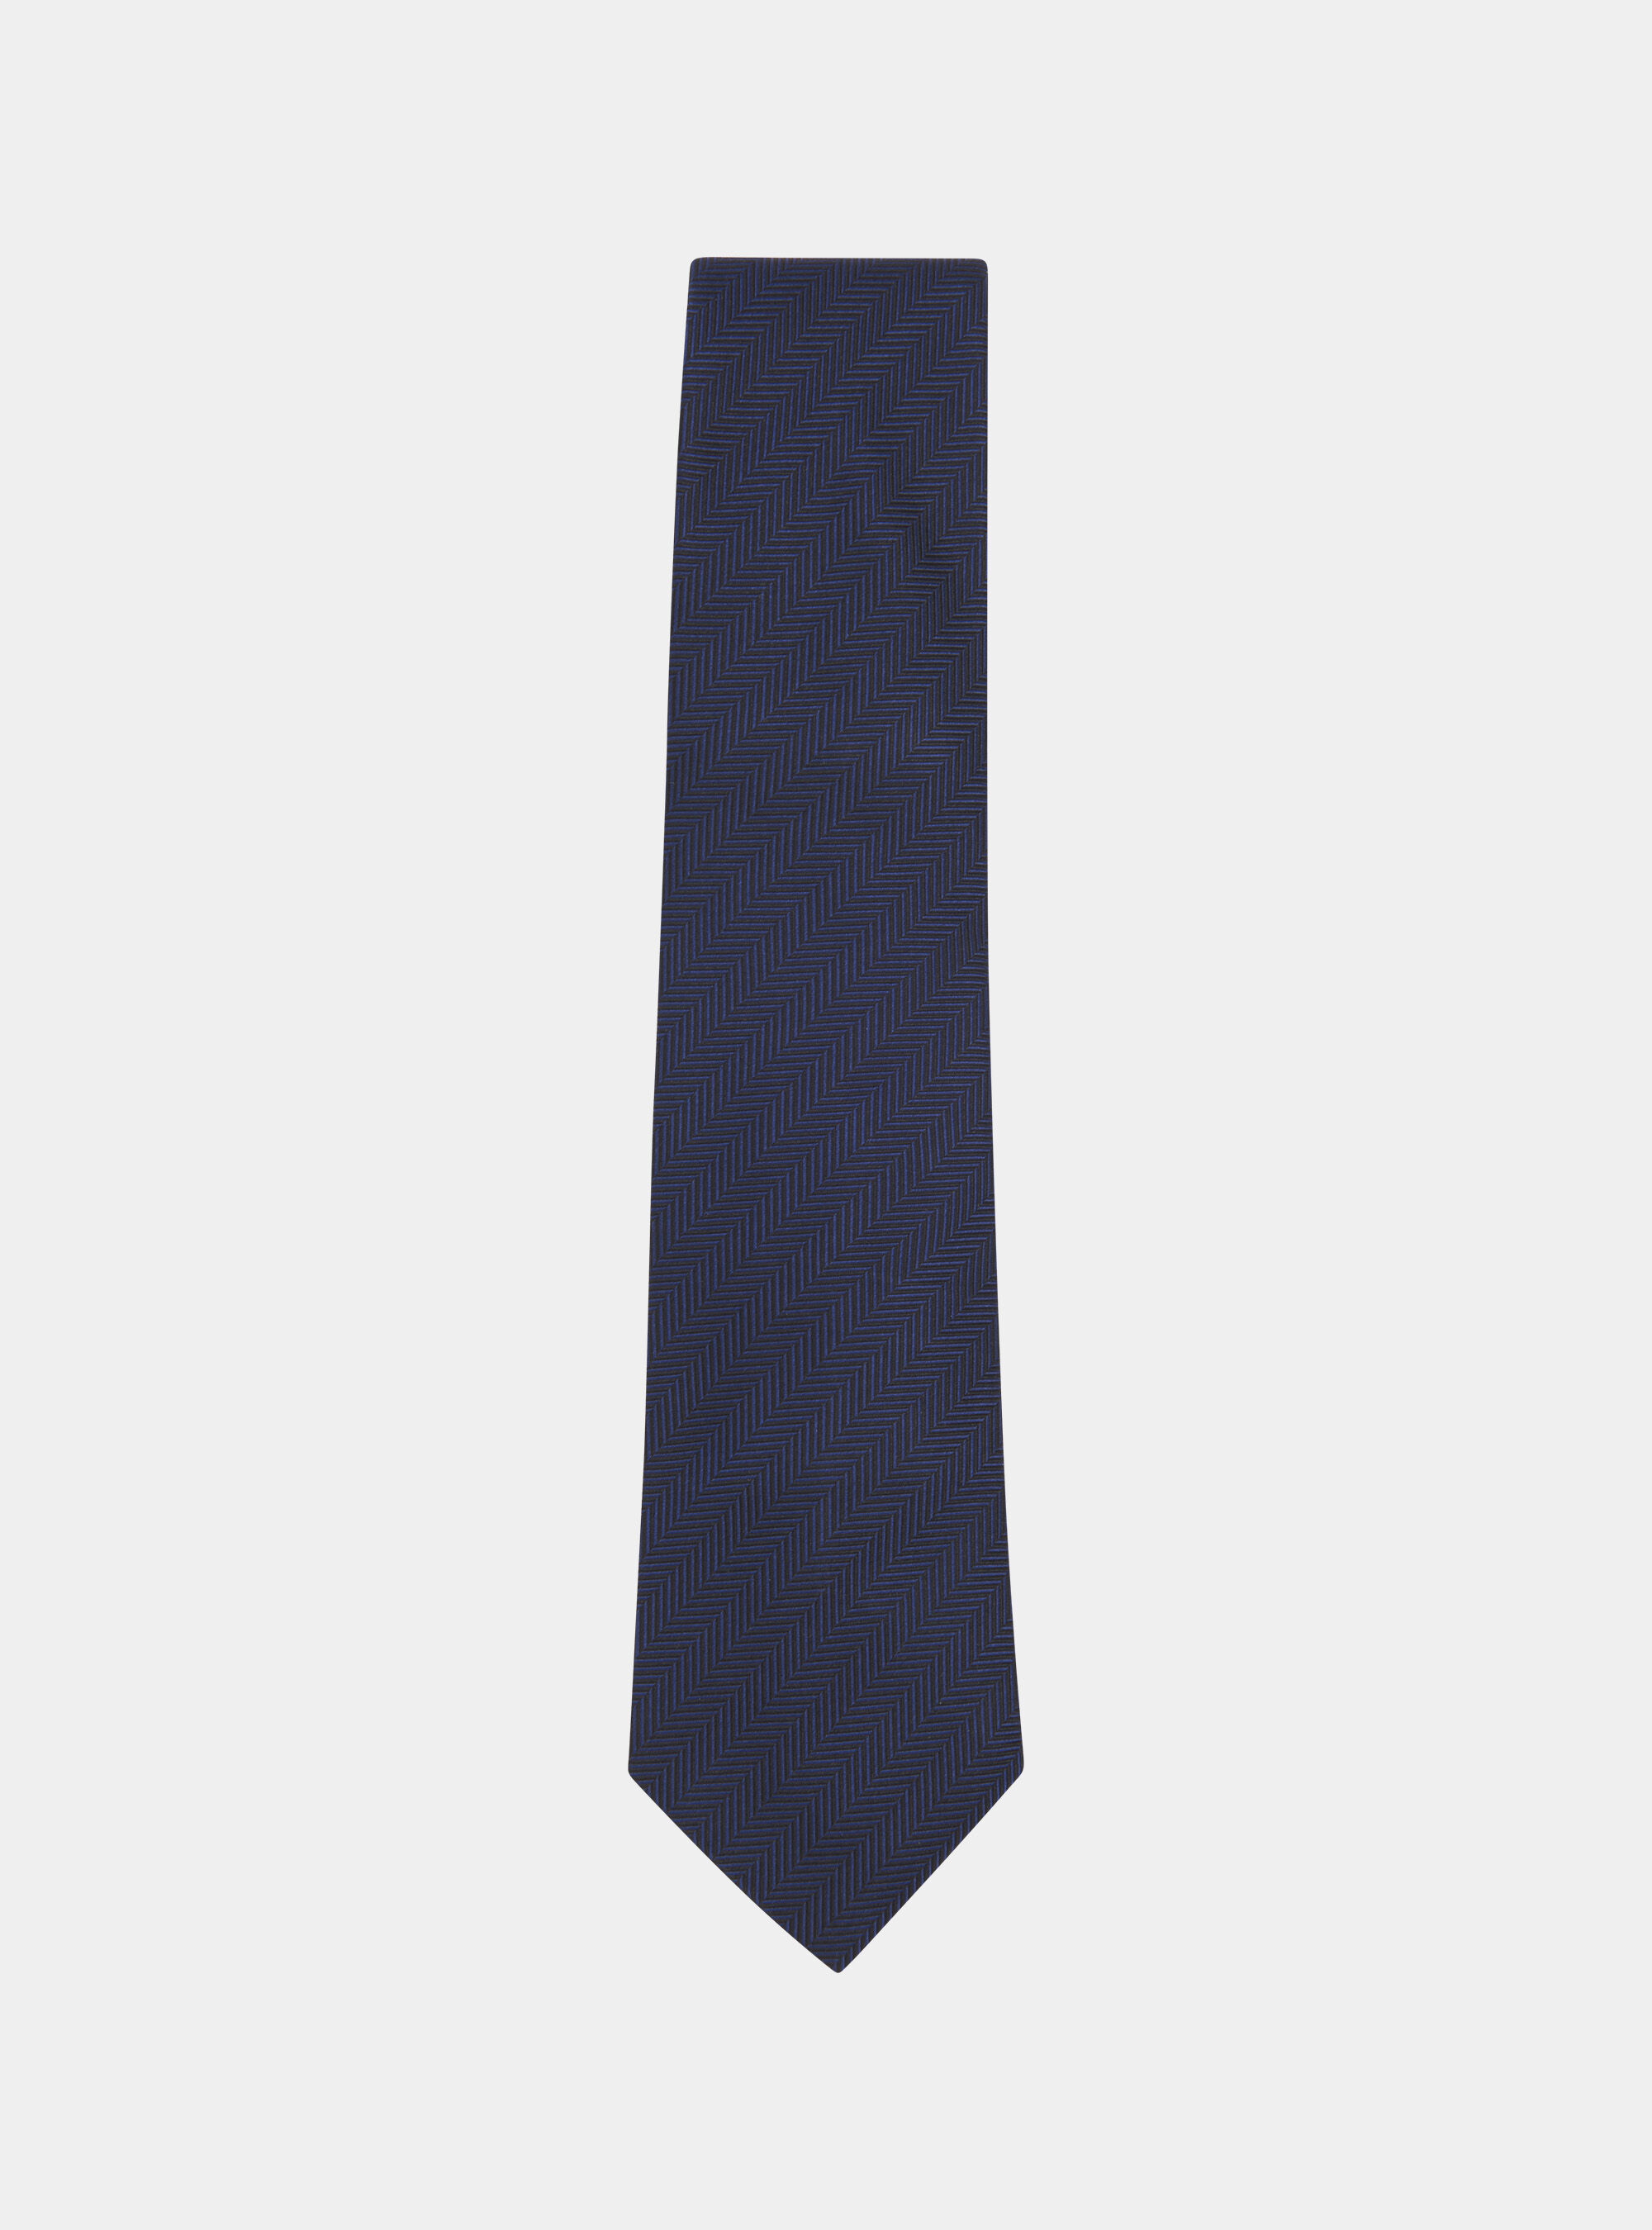 Cravatta a fioriCanali in Seta da Uomo colore Blu Uomo Accessori da Cravatte da 